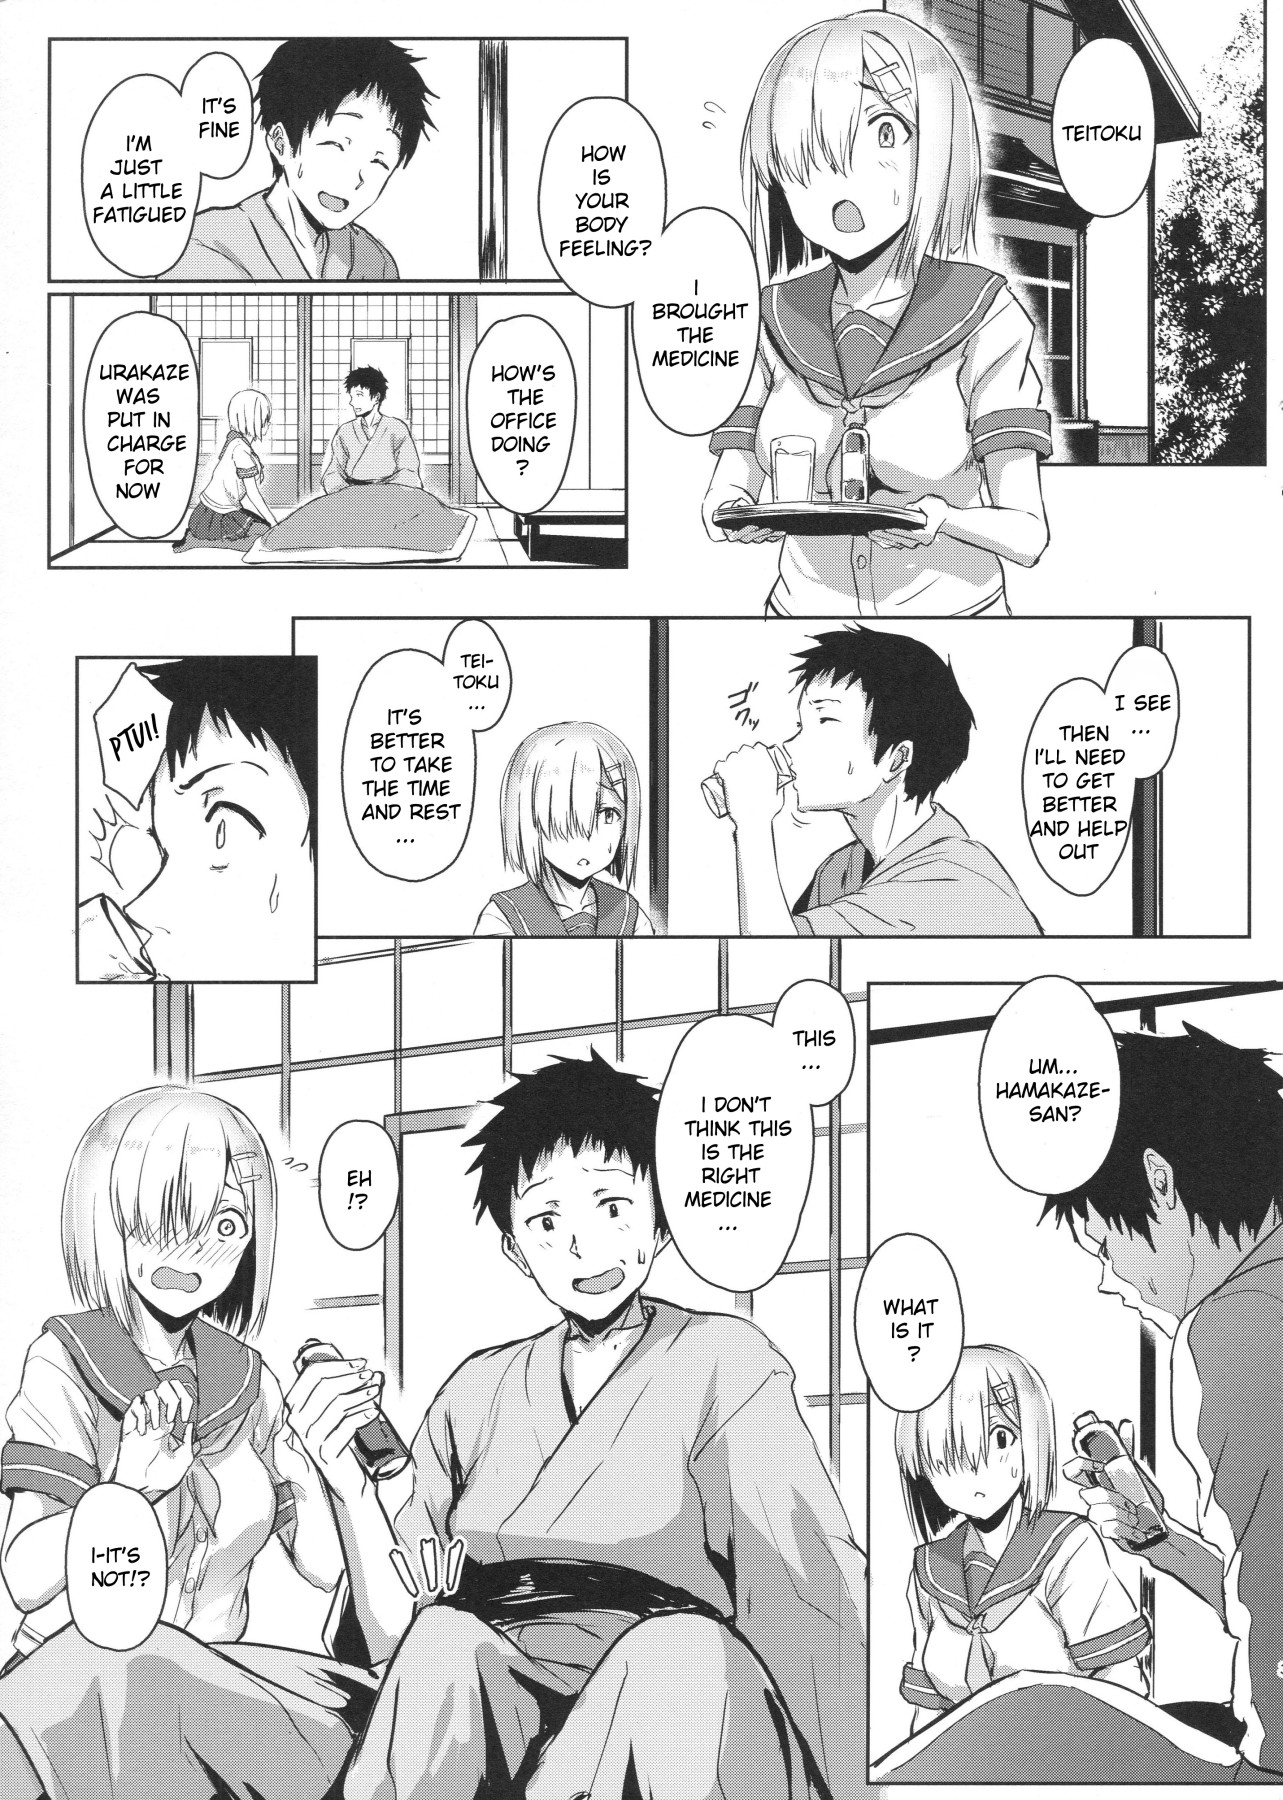 Hentai Manga Comic-A Book About Hamakaze Sucking on It-Read-2